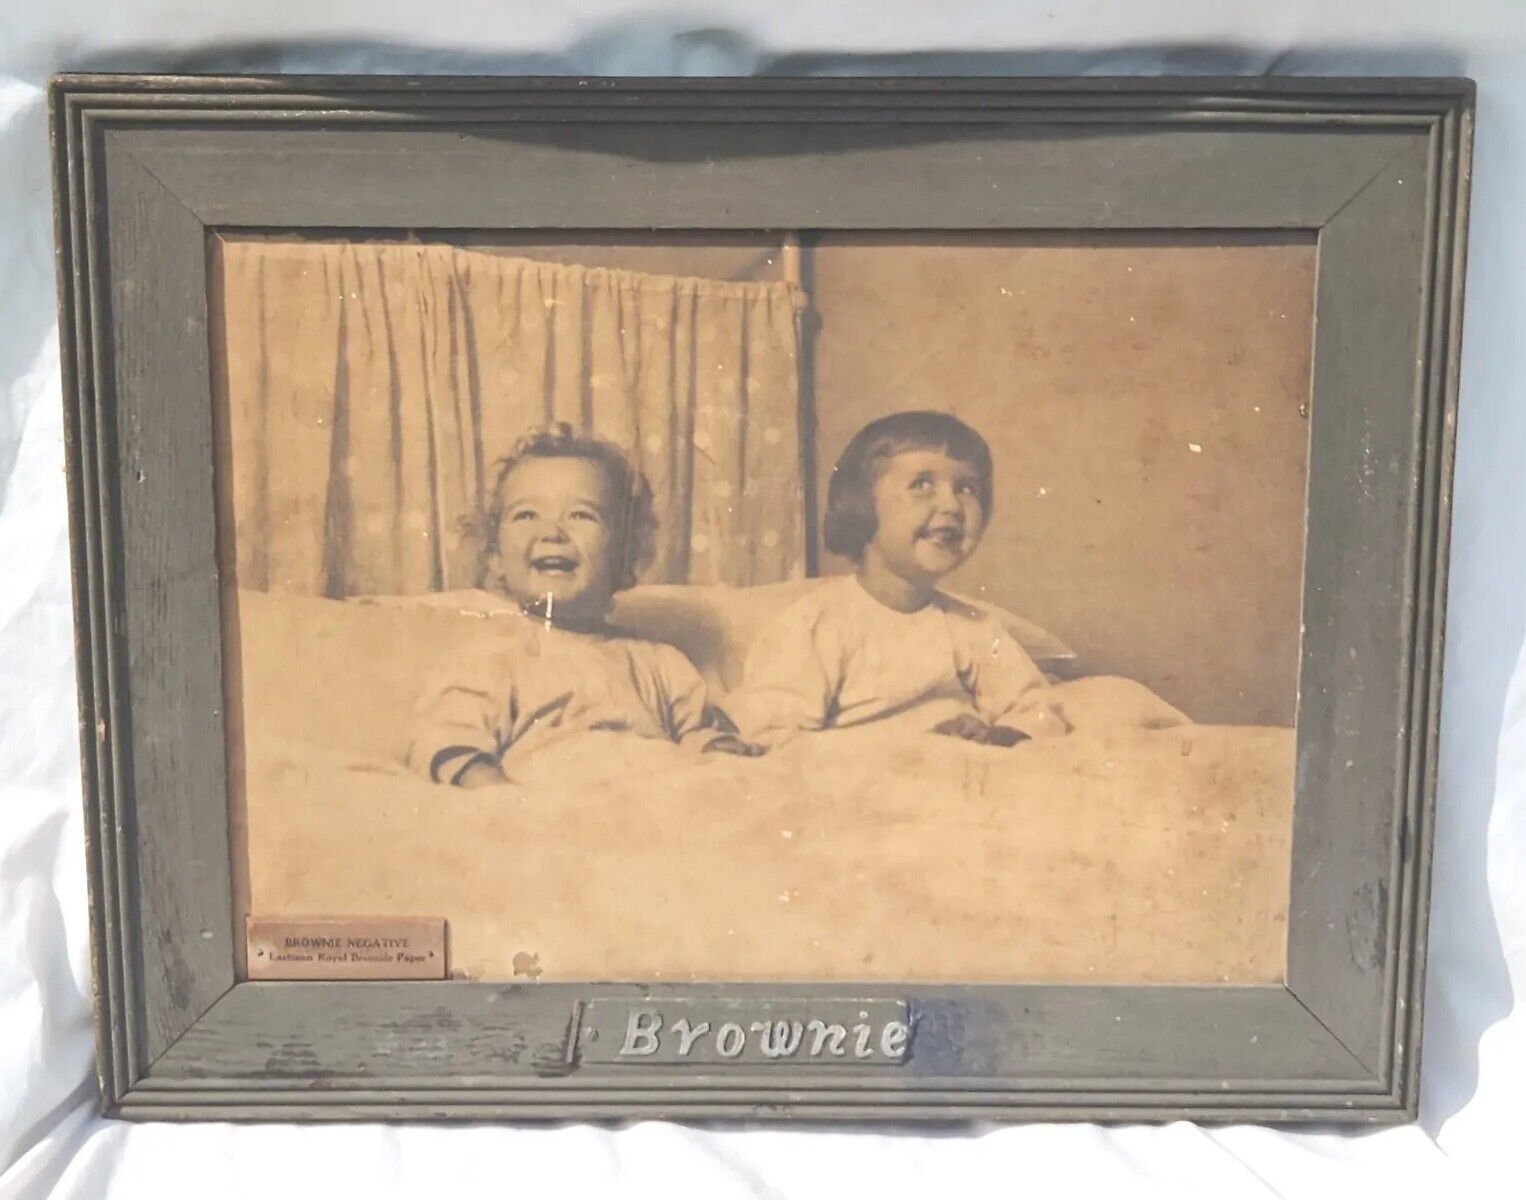 Rare Antique Kodak Store Display Framed Print Advertisement Sibling Toddlers